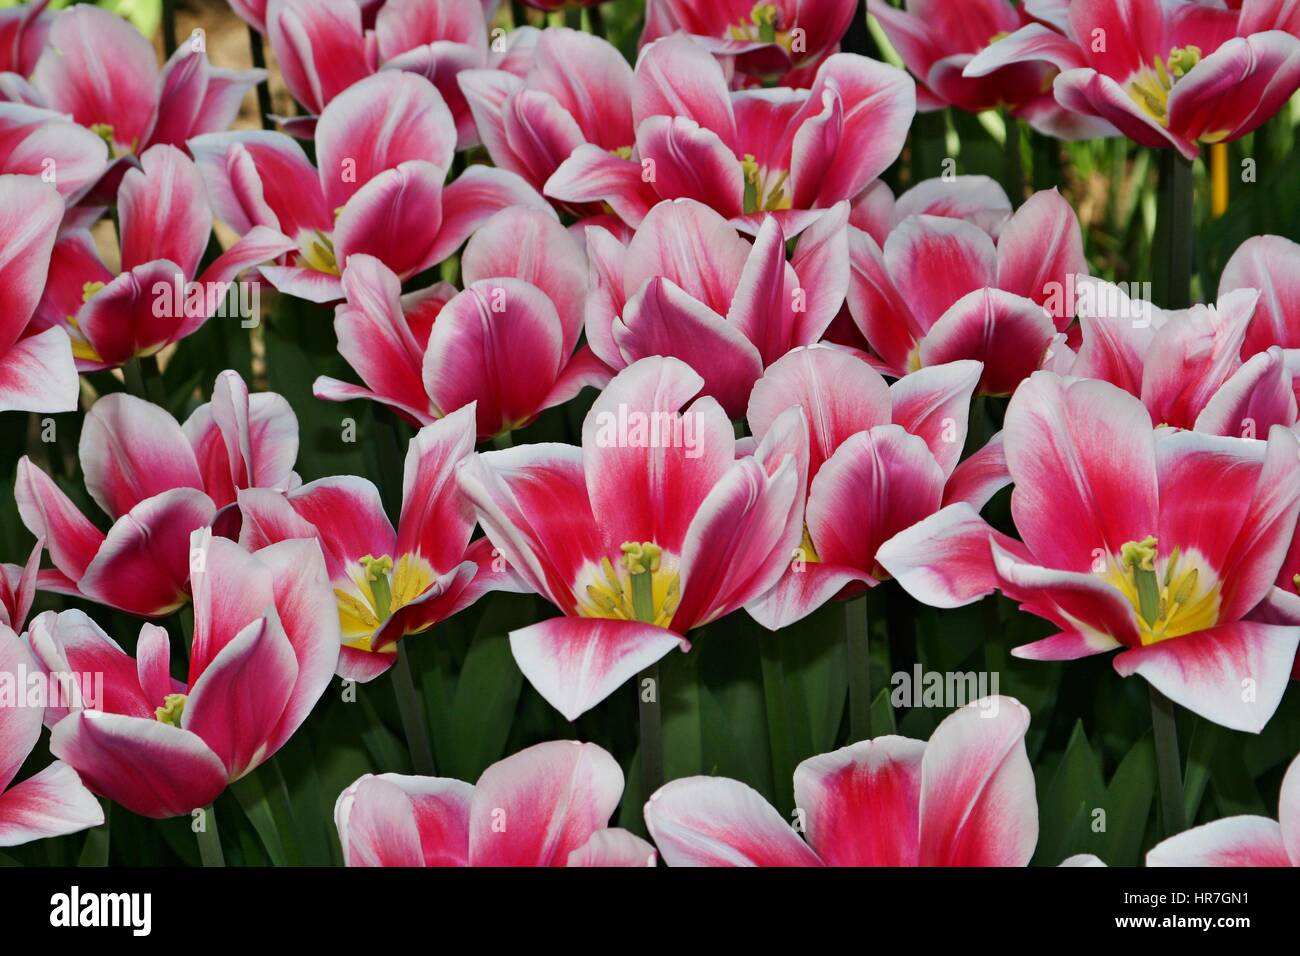 Rosa e Bianco Blooming trionfo tulipani 'Dream mondo', Parco Keukenhof, Olanda Foto Stock